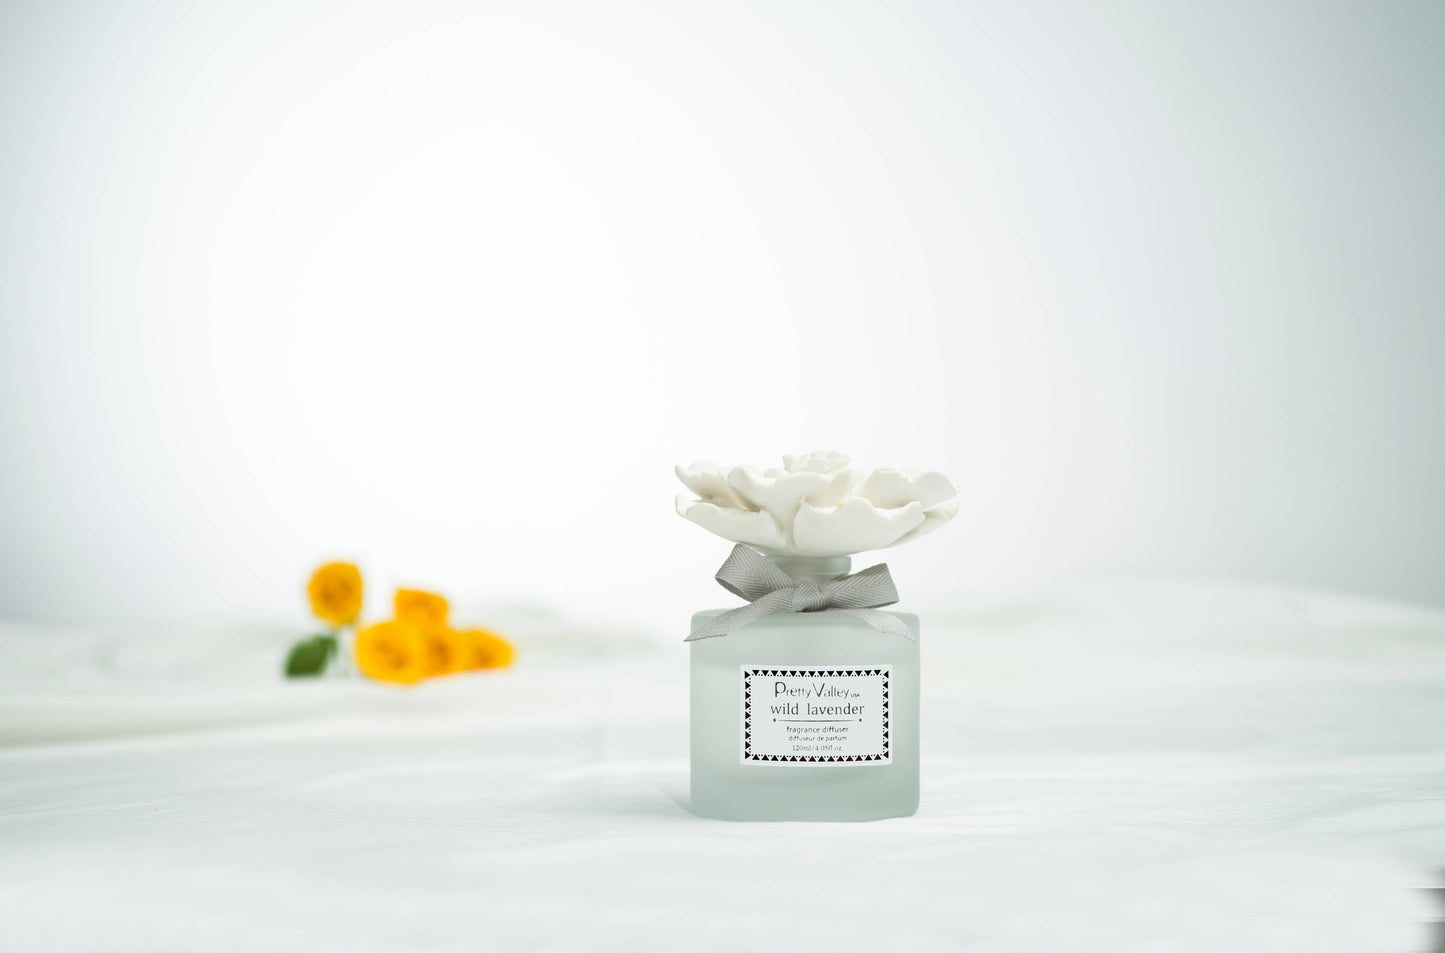 Marigold Ceramic Flower Diffuser Gift Set - White Jasmine